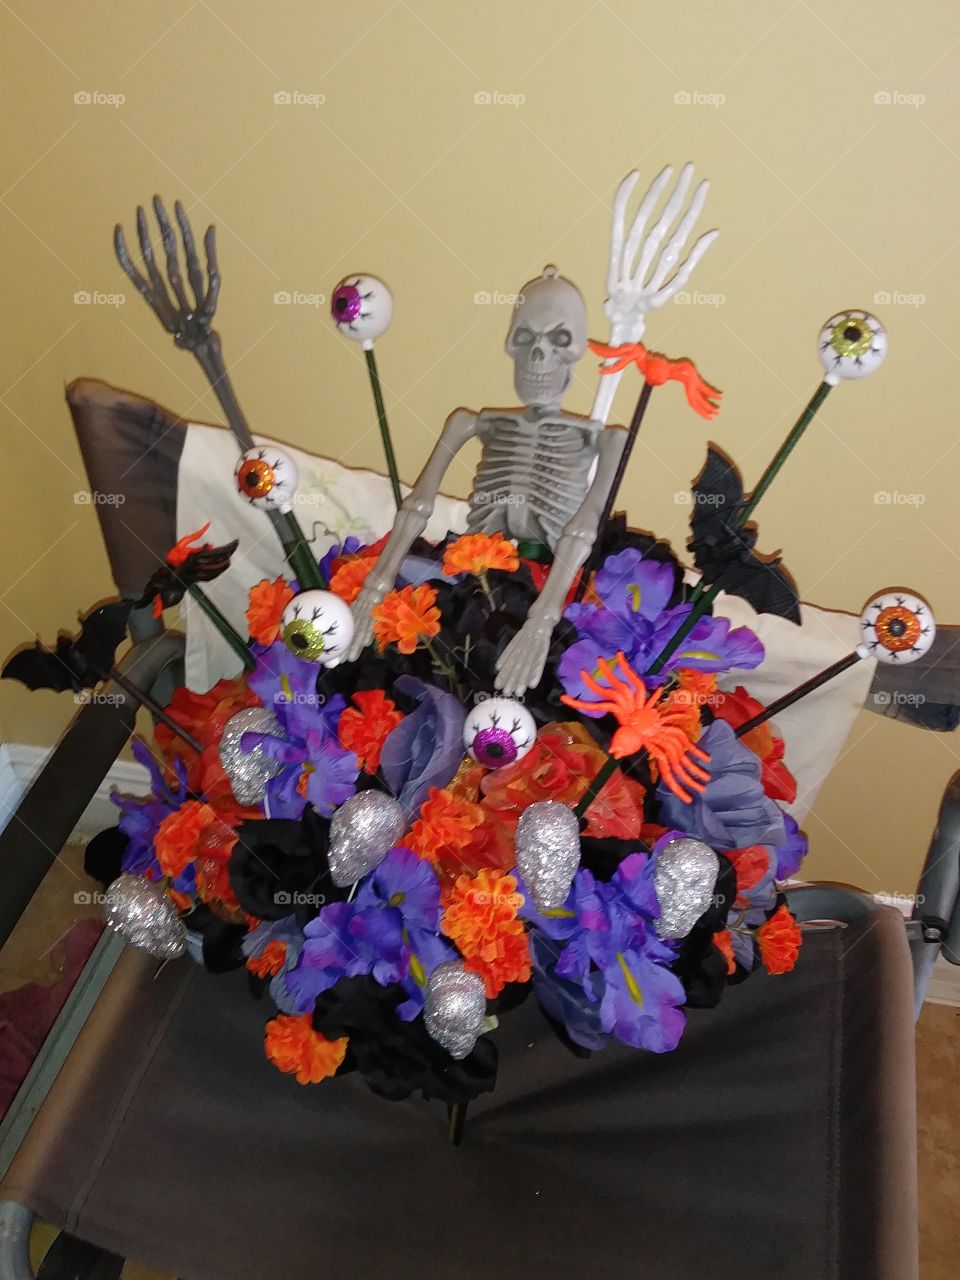 Decorative Halloween bouquet